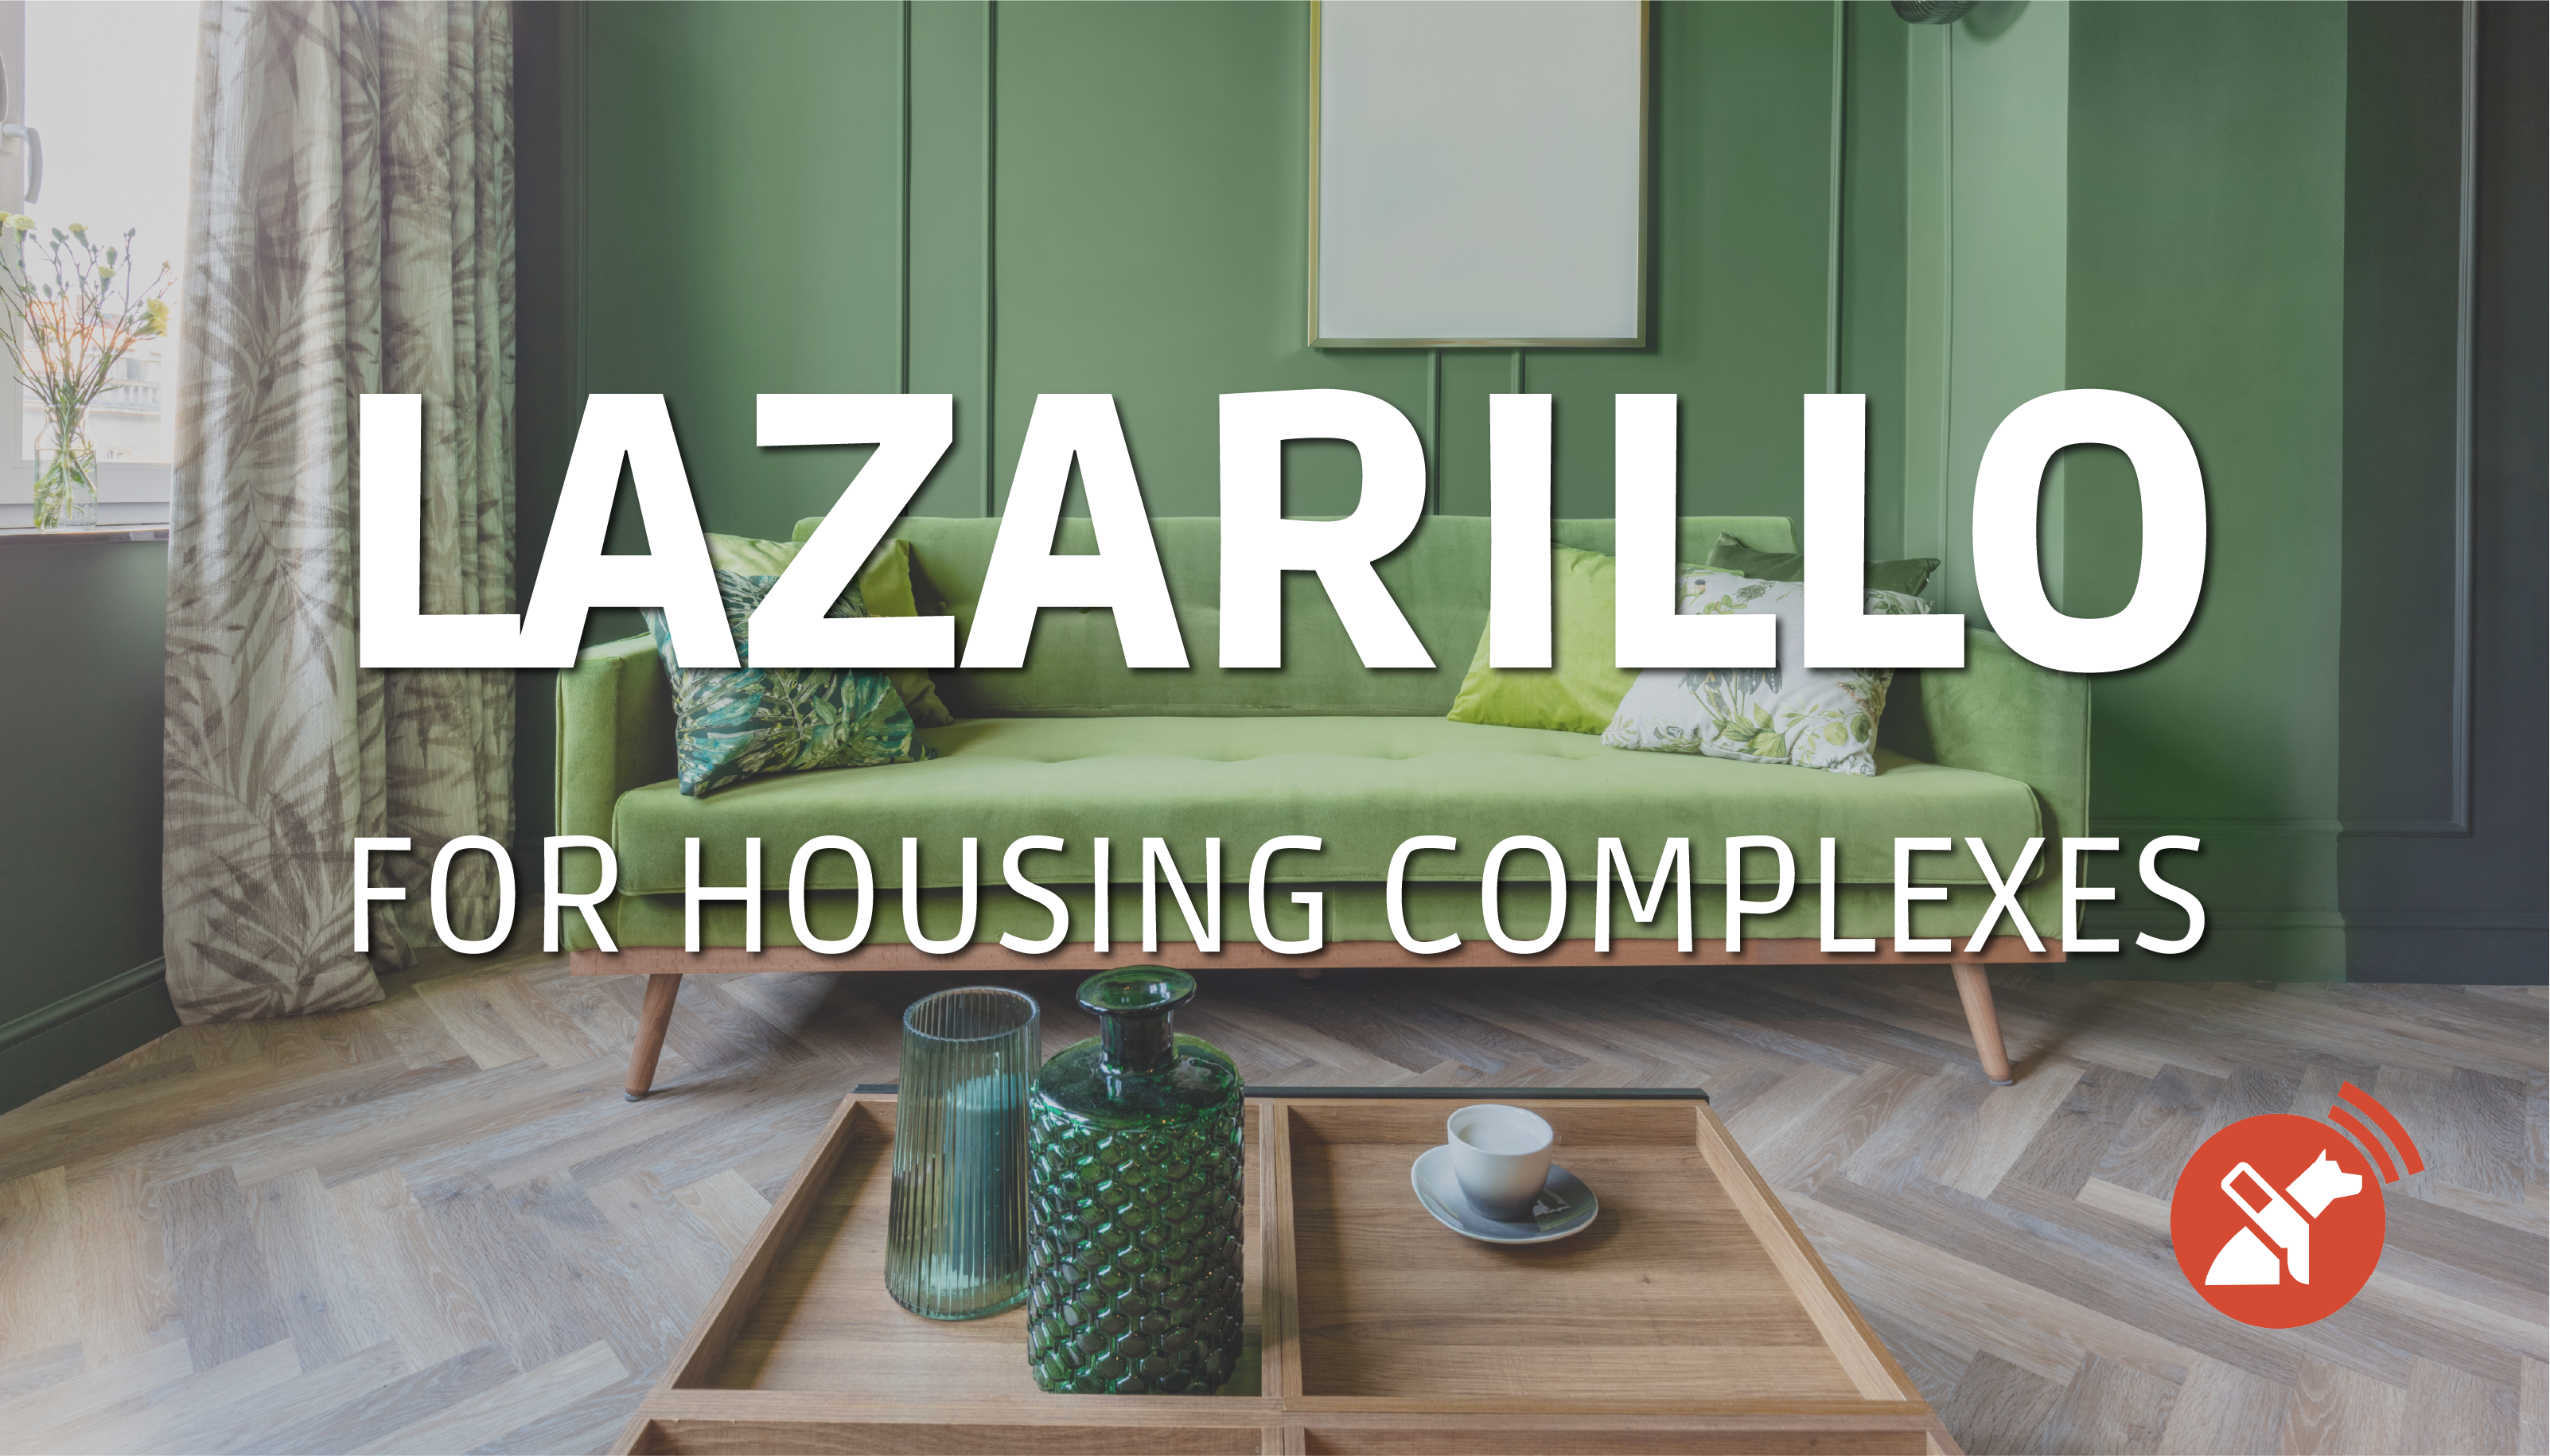 Thumbnail Image: Lazarillo for Housing Complexes